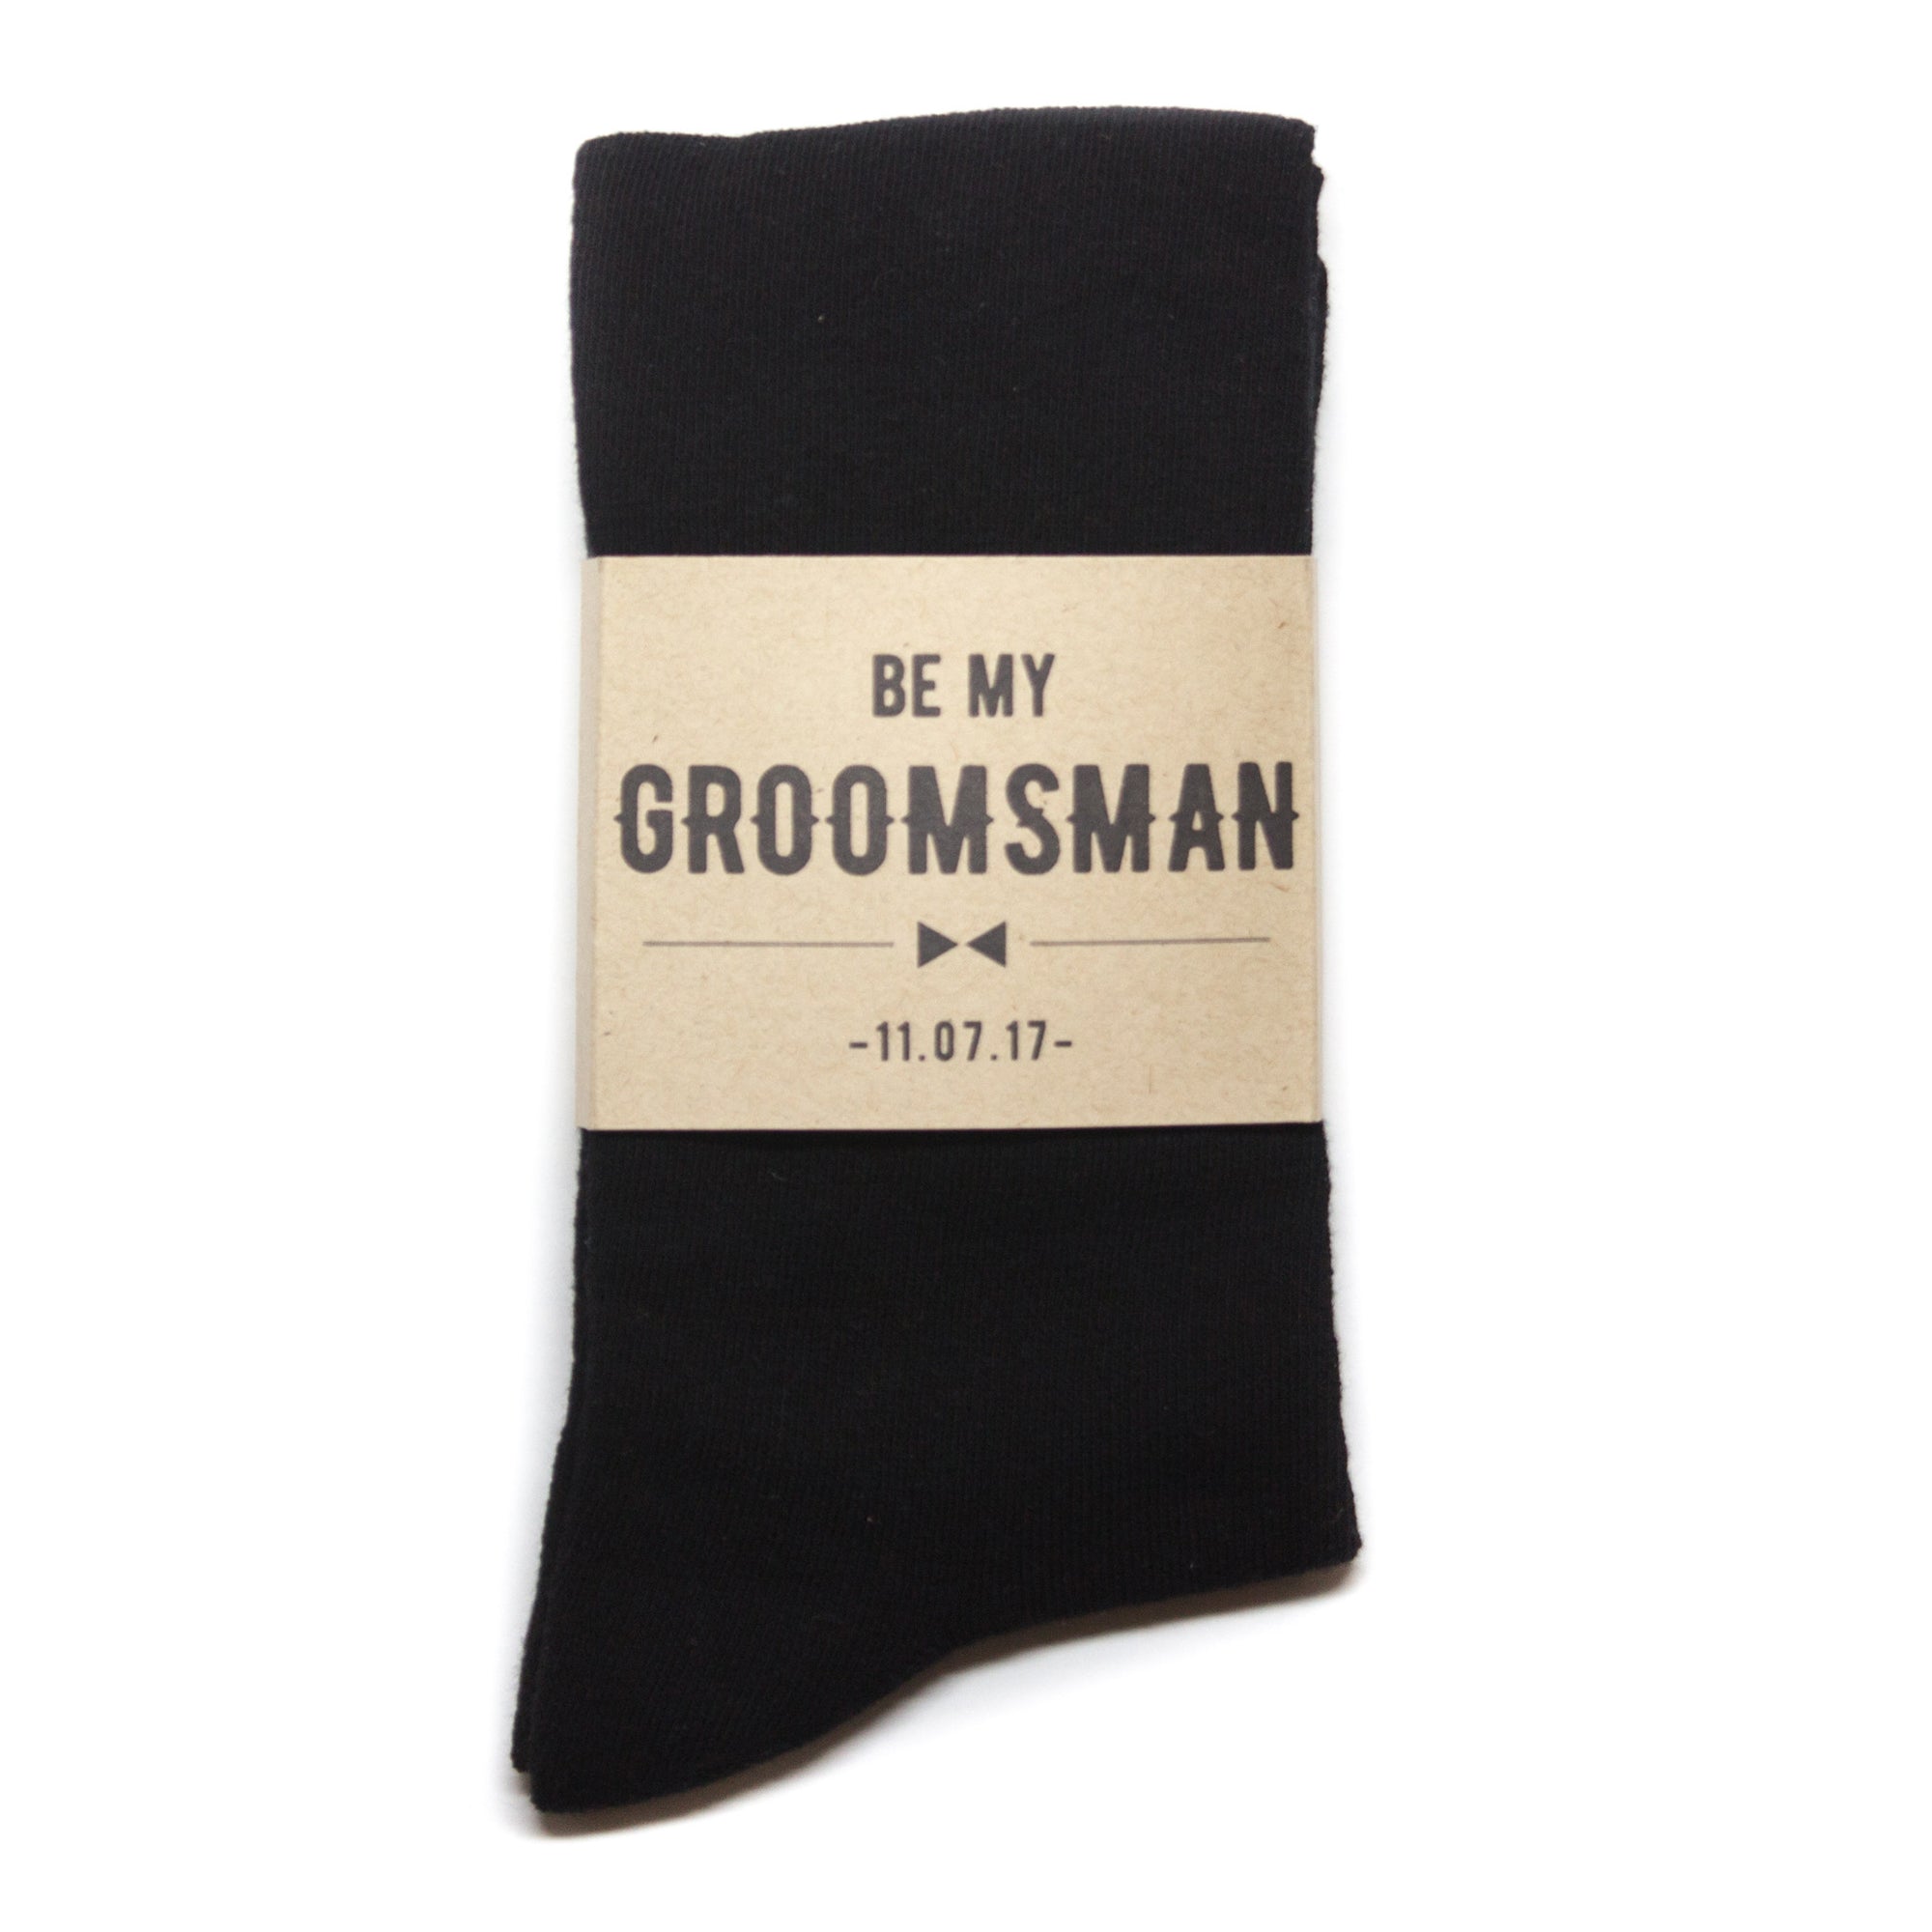 "Be My Groomsman" Label | NoColdFeet